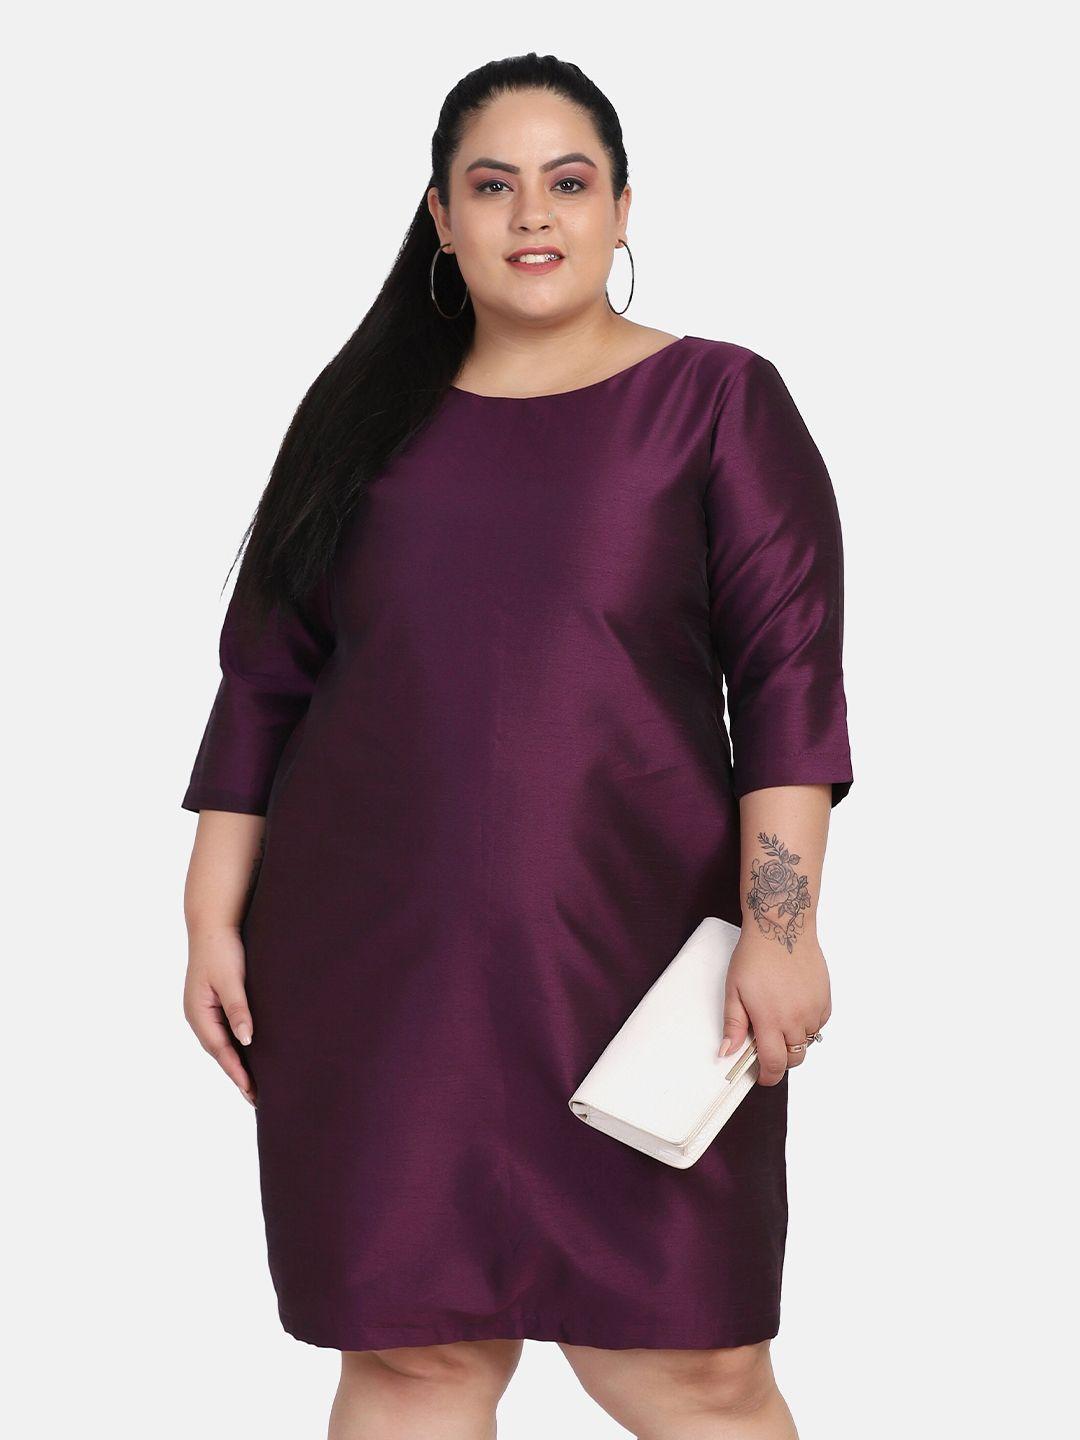 powersutra-womens-purple-plus-size-bodycon-dress